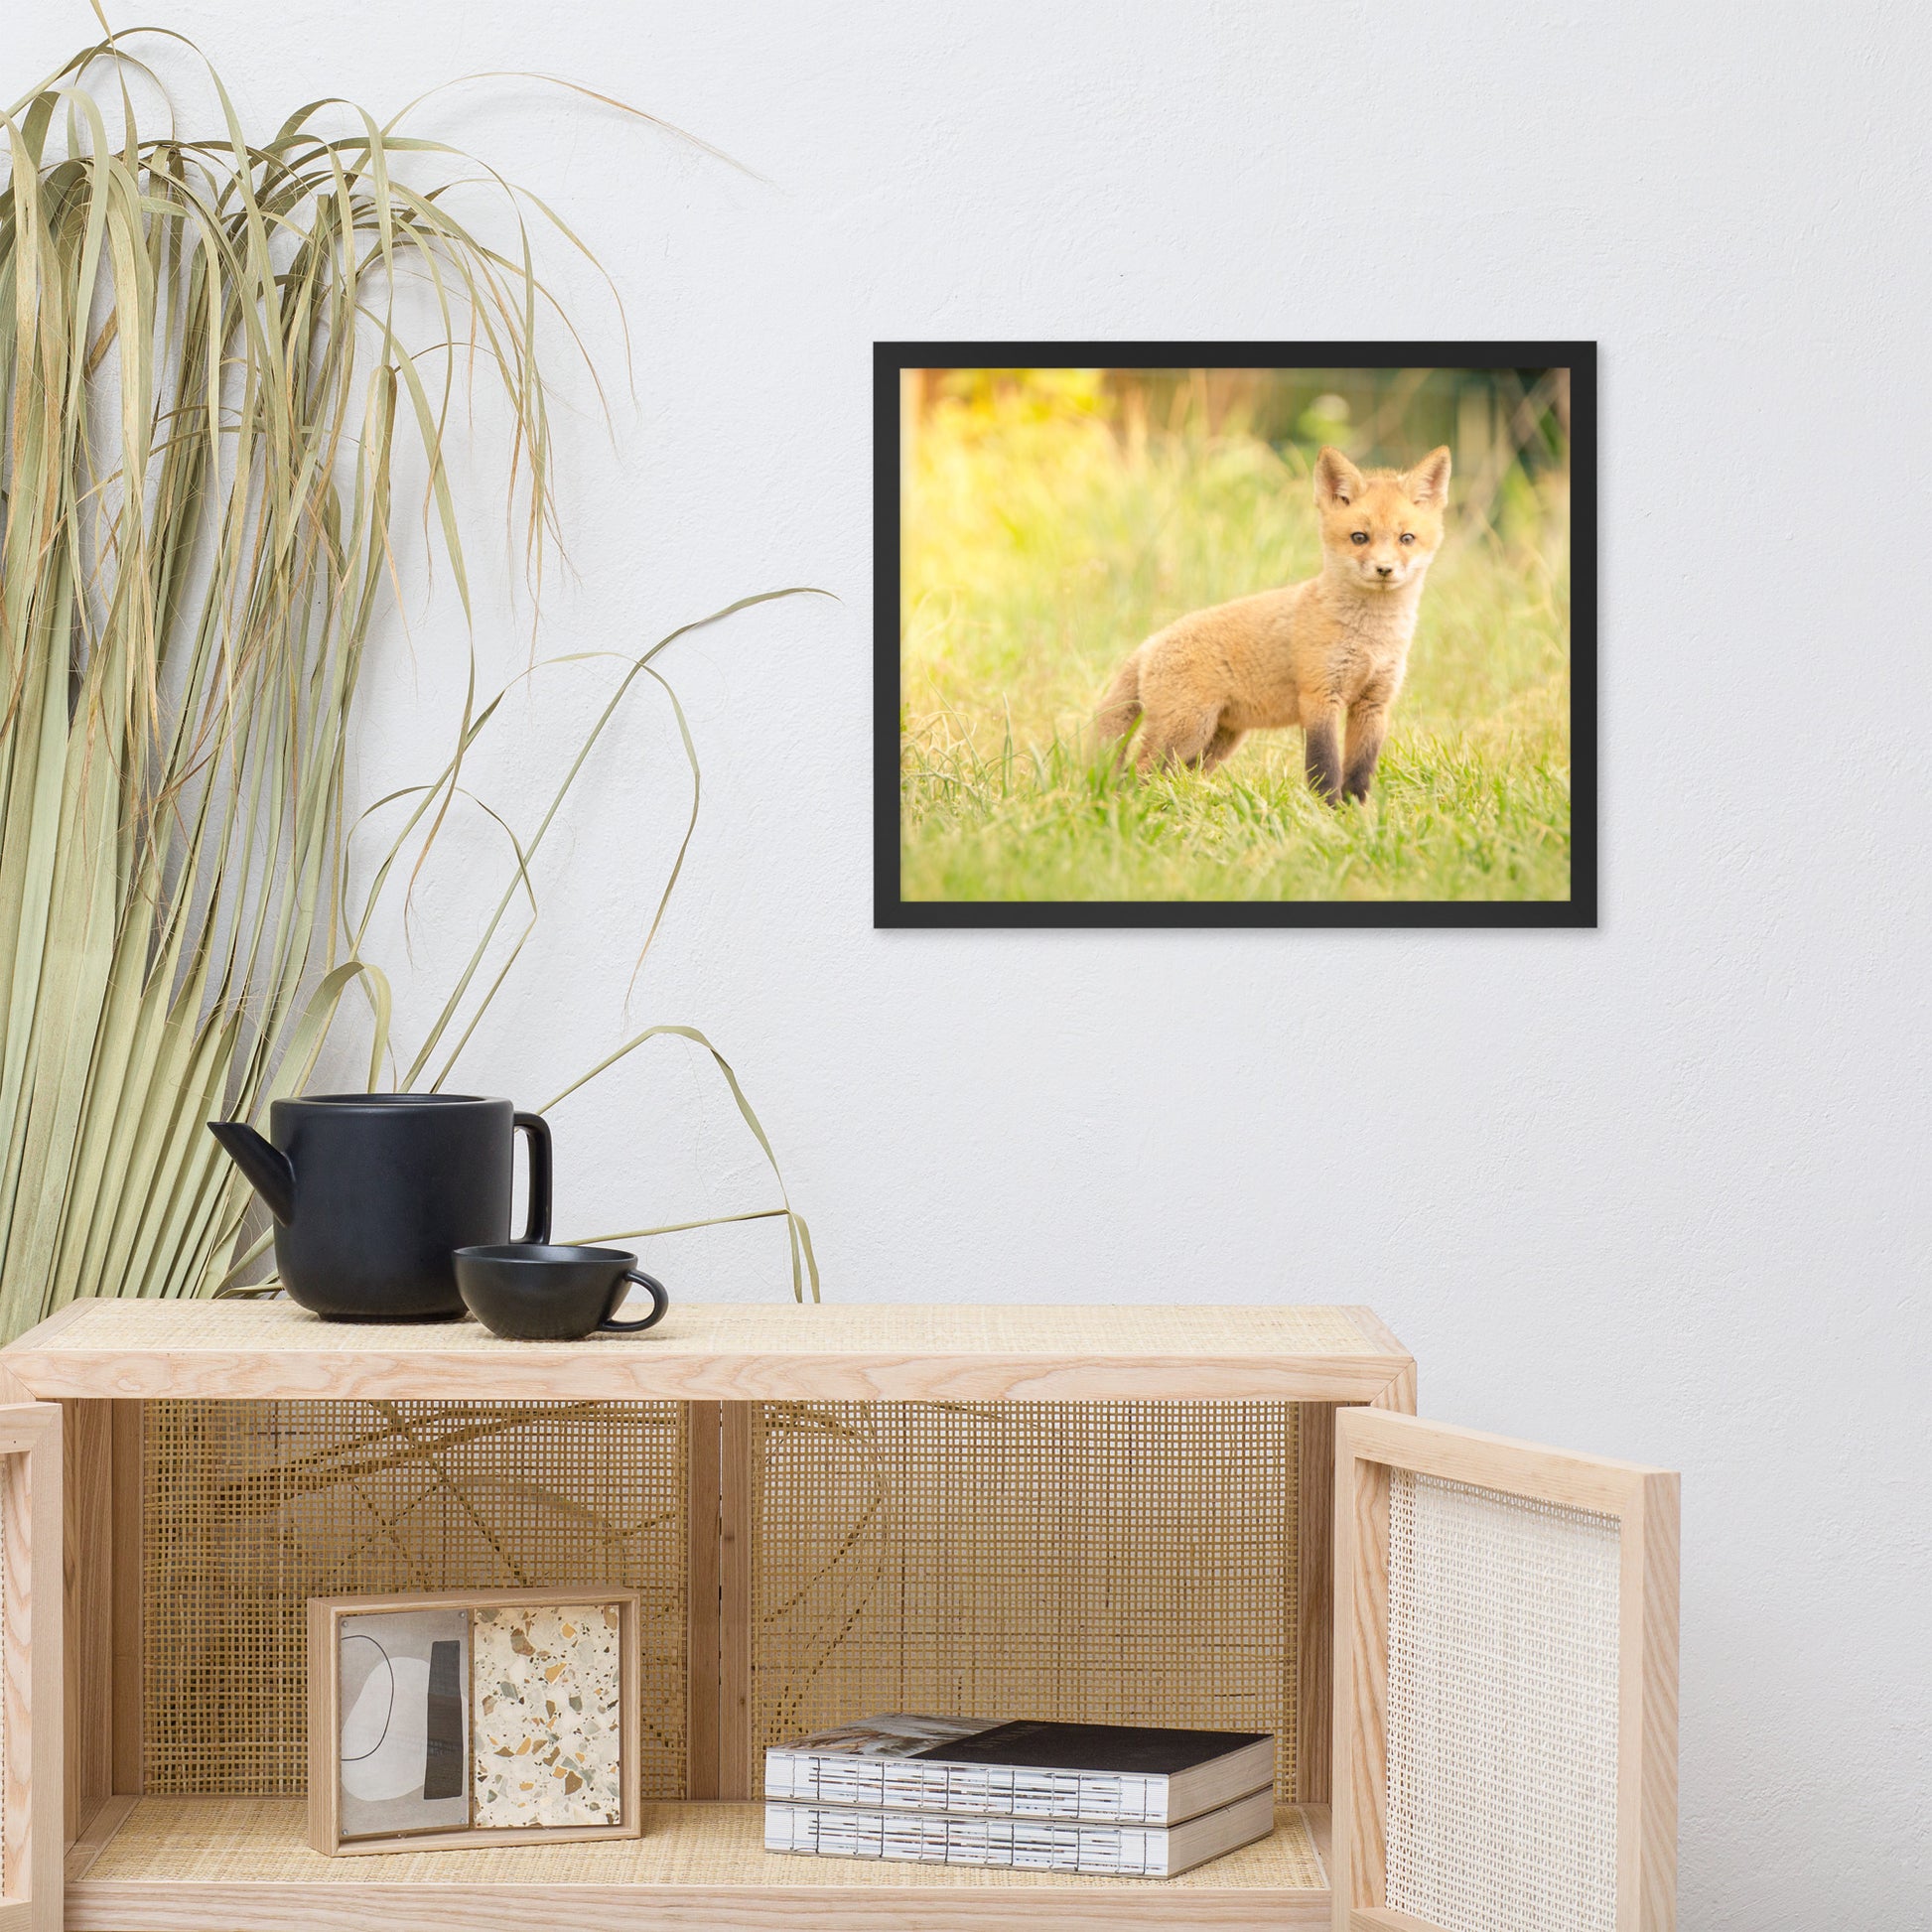 Framed Nursery Wall Art: Baby Red Fox in the Sun - Animal / Wildlife / Nature Artwork - Wall Decor - Framed Wall Art Print